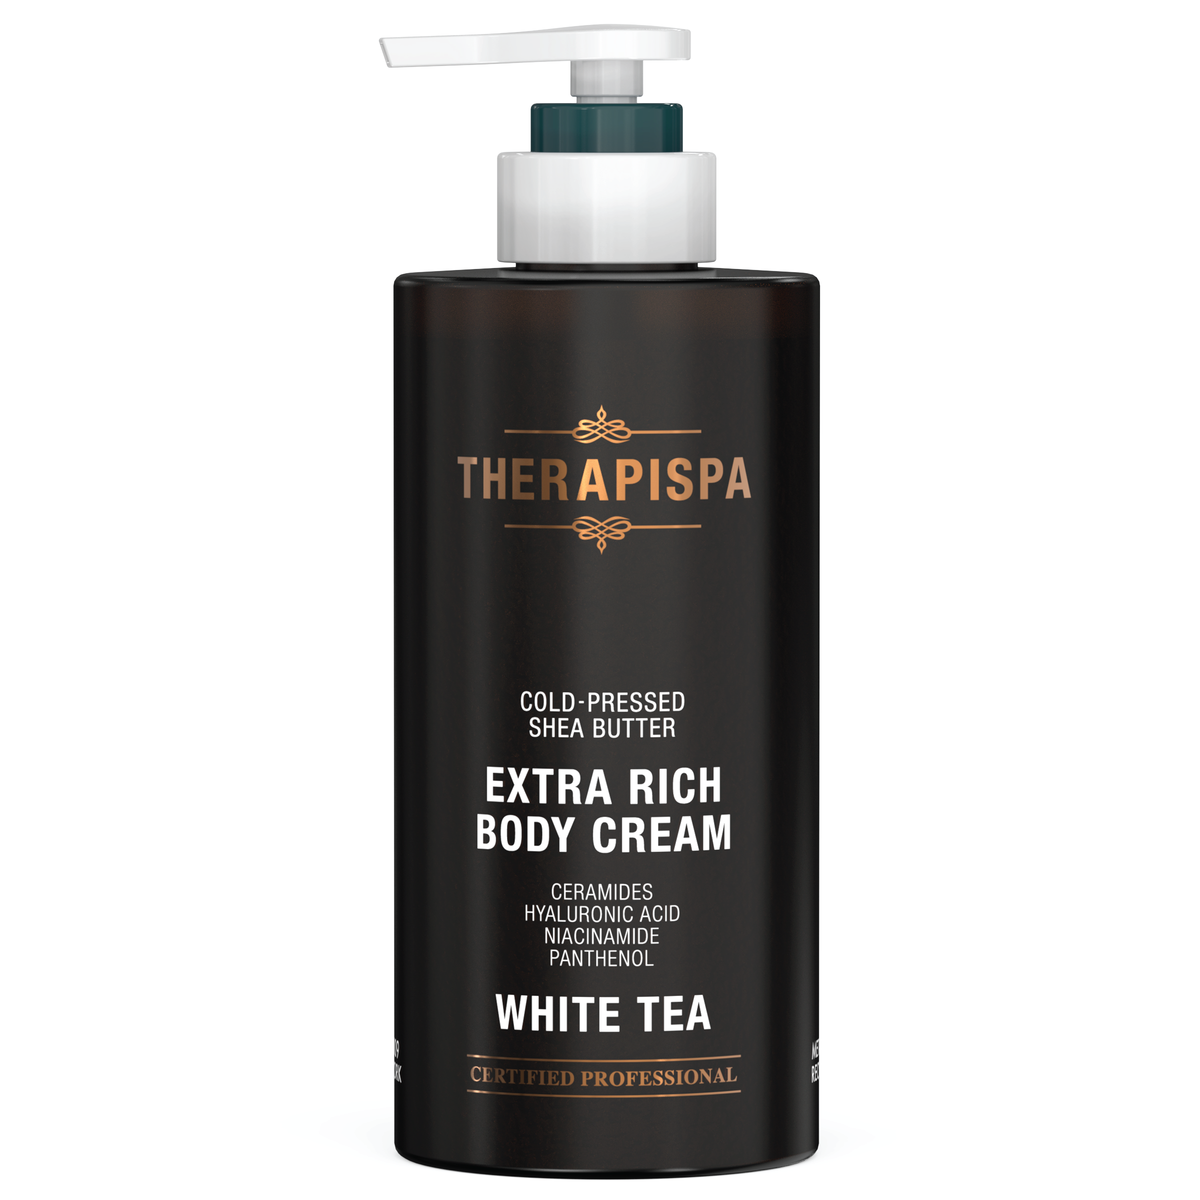 Extra Rich Body Cream / White Tea